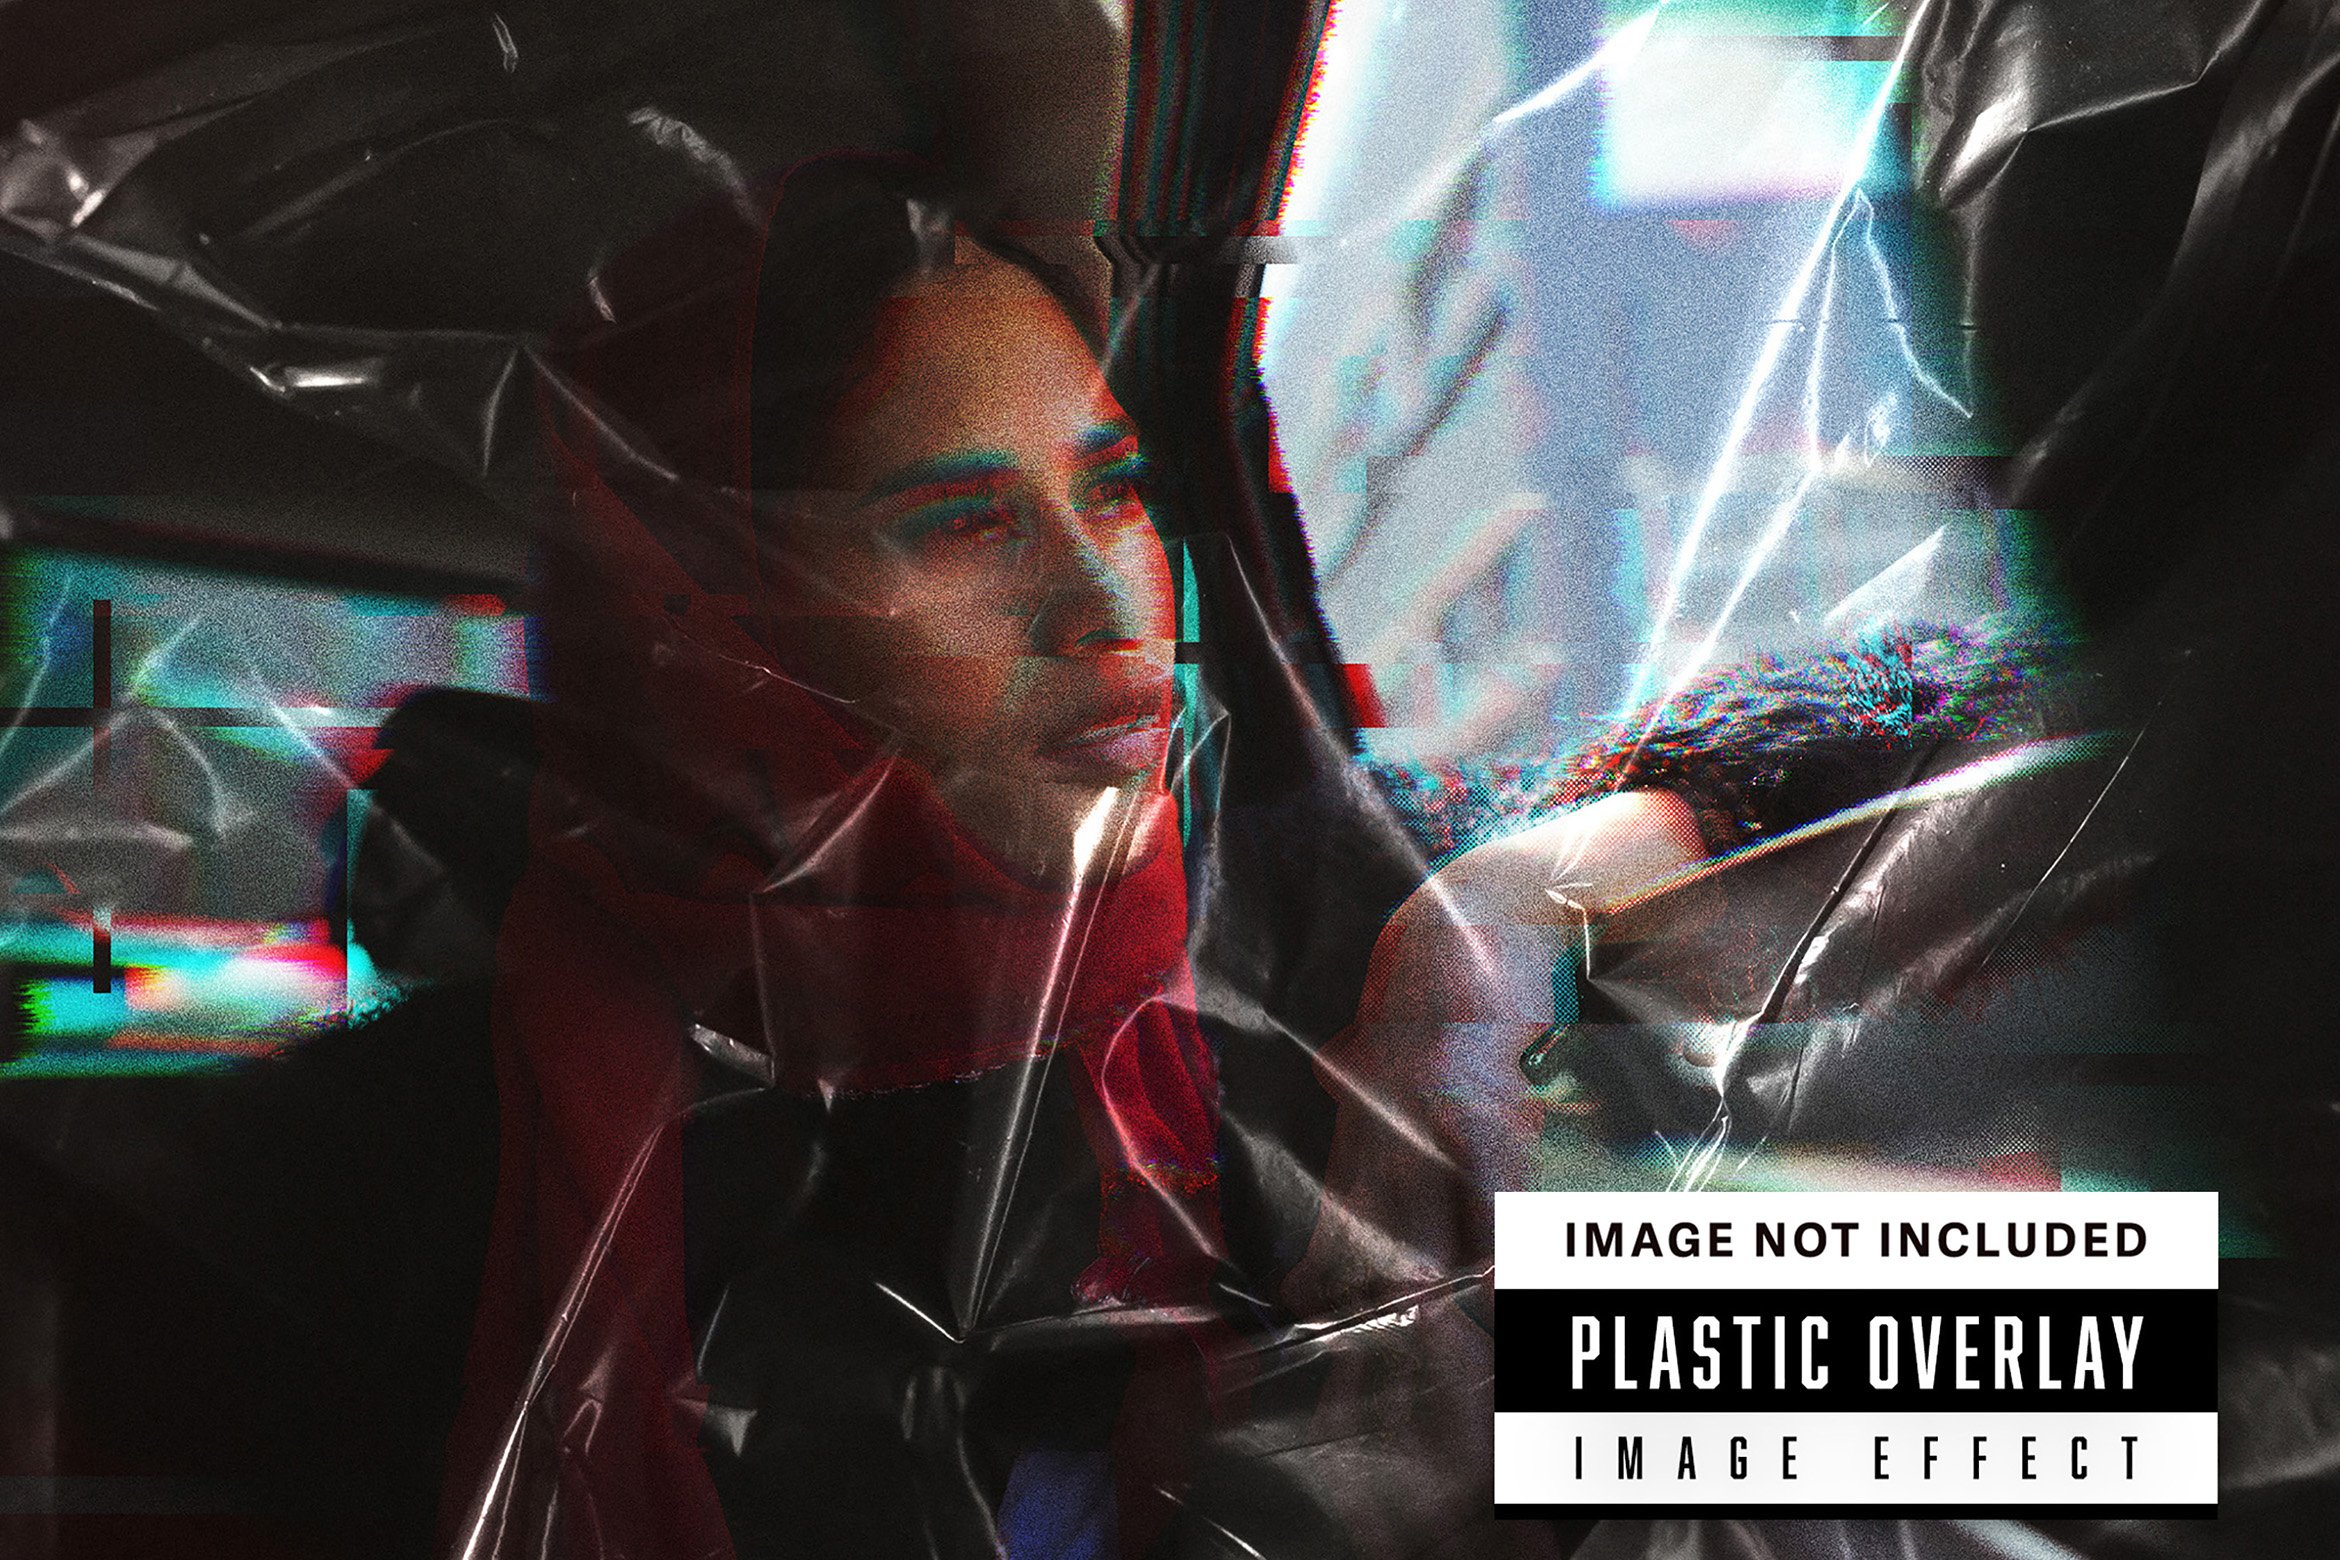 Plastic overlay image effectcover image.